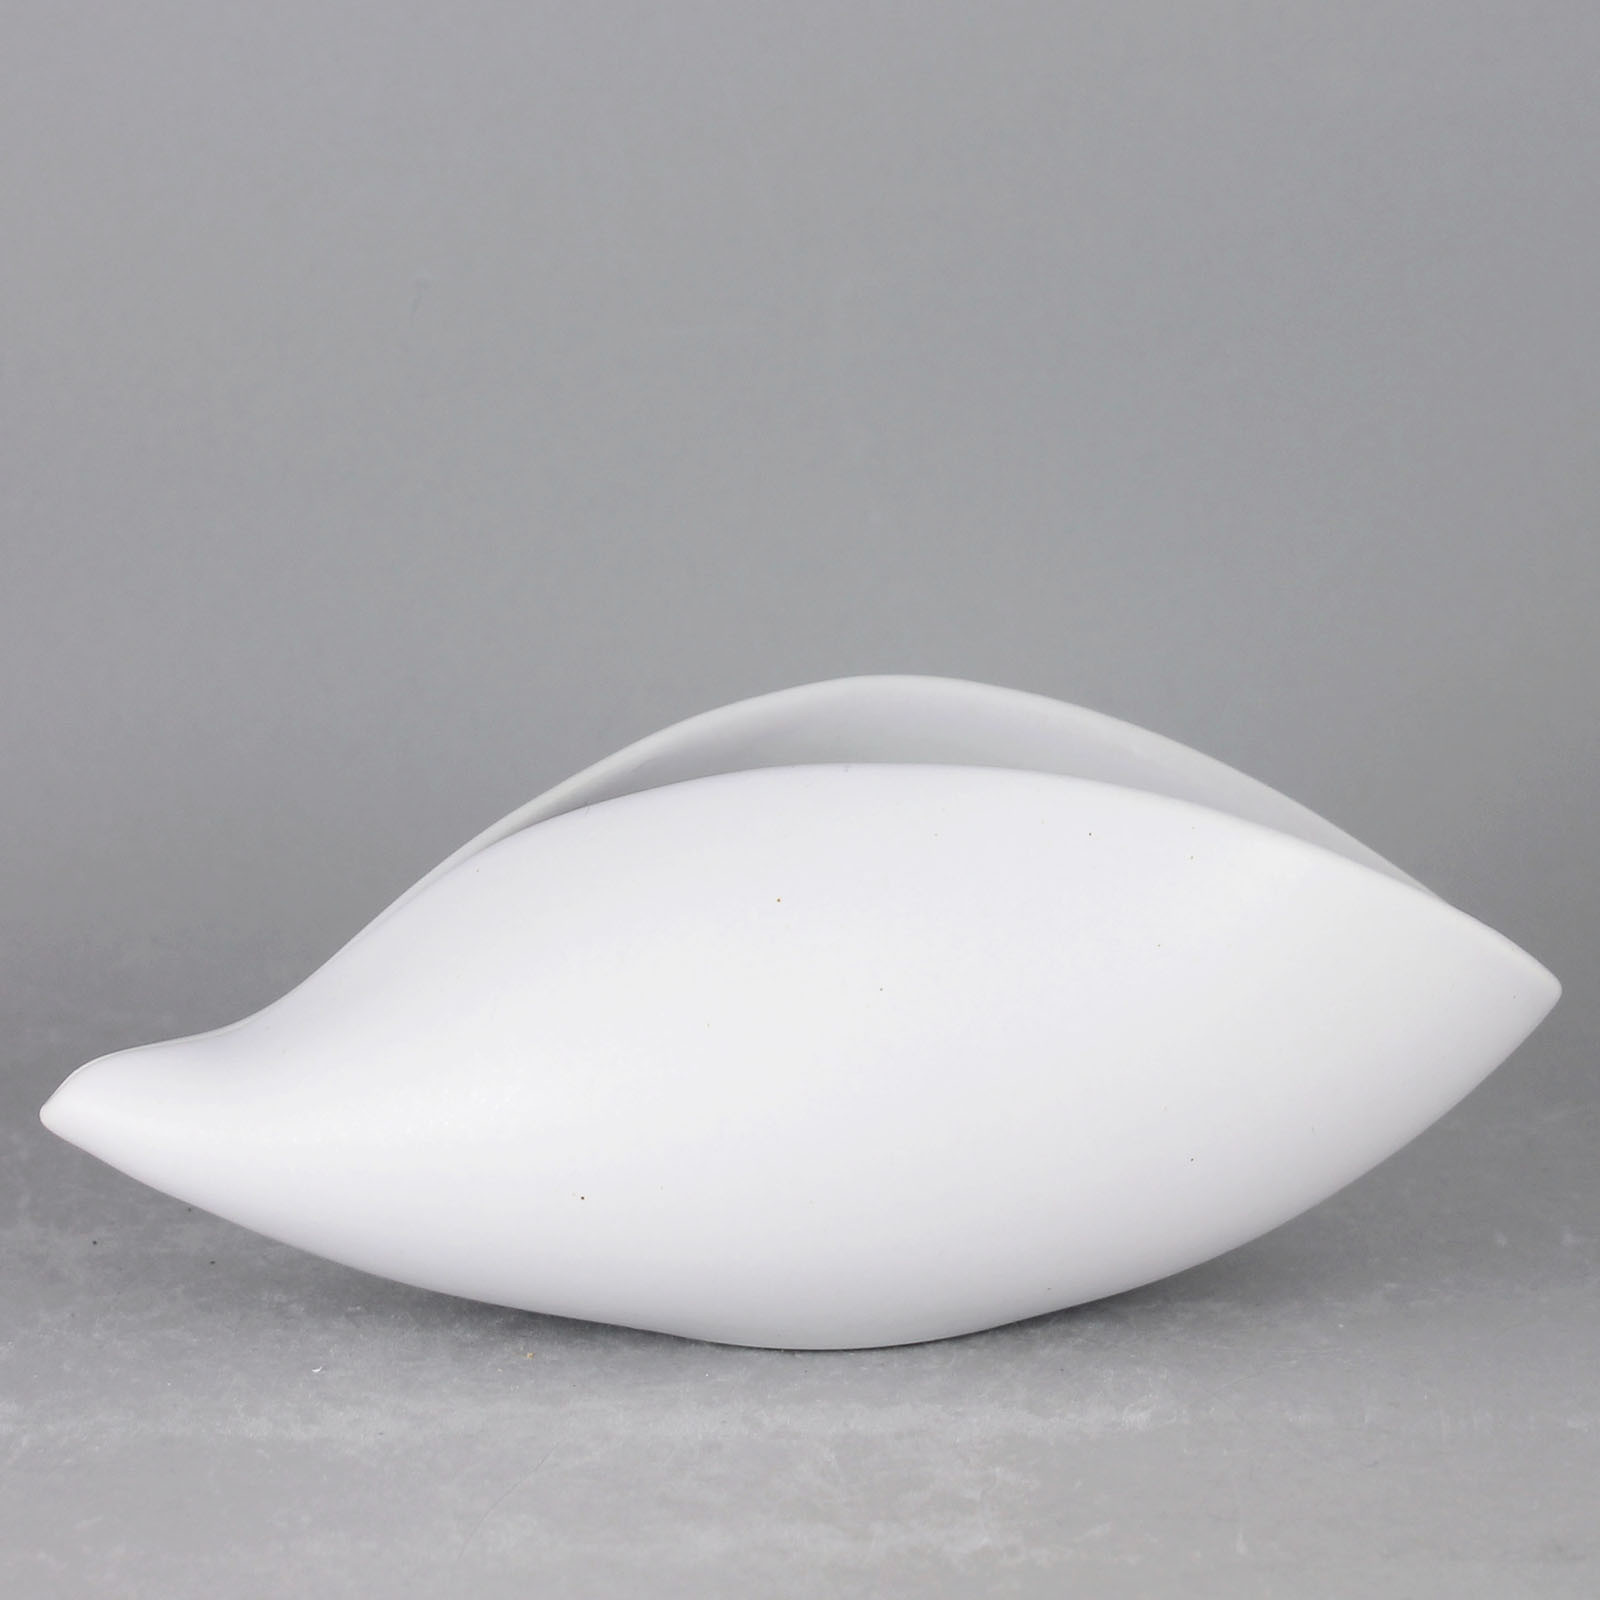 10 Lovable White Ceramic Owl Vase 2024 free download white ceramic owl vase of stig lindberg veckla 1950 streamlined white bowl with inner decor within 154356638 origpic 521f79